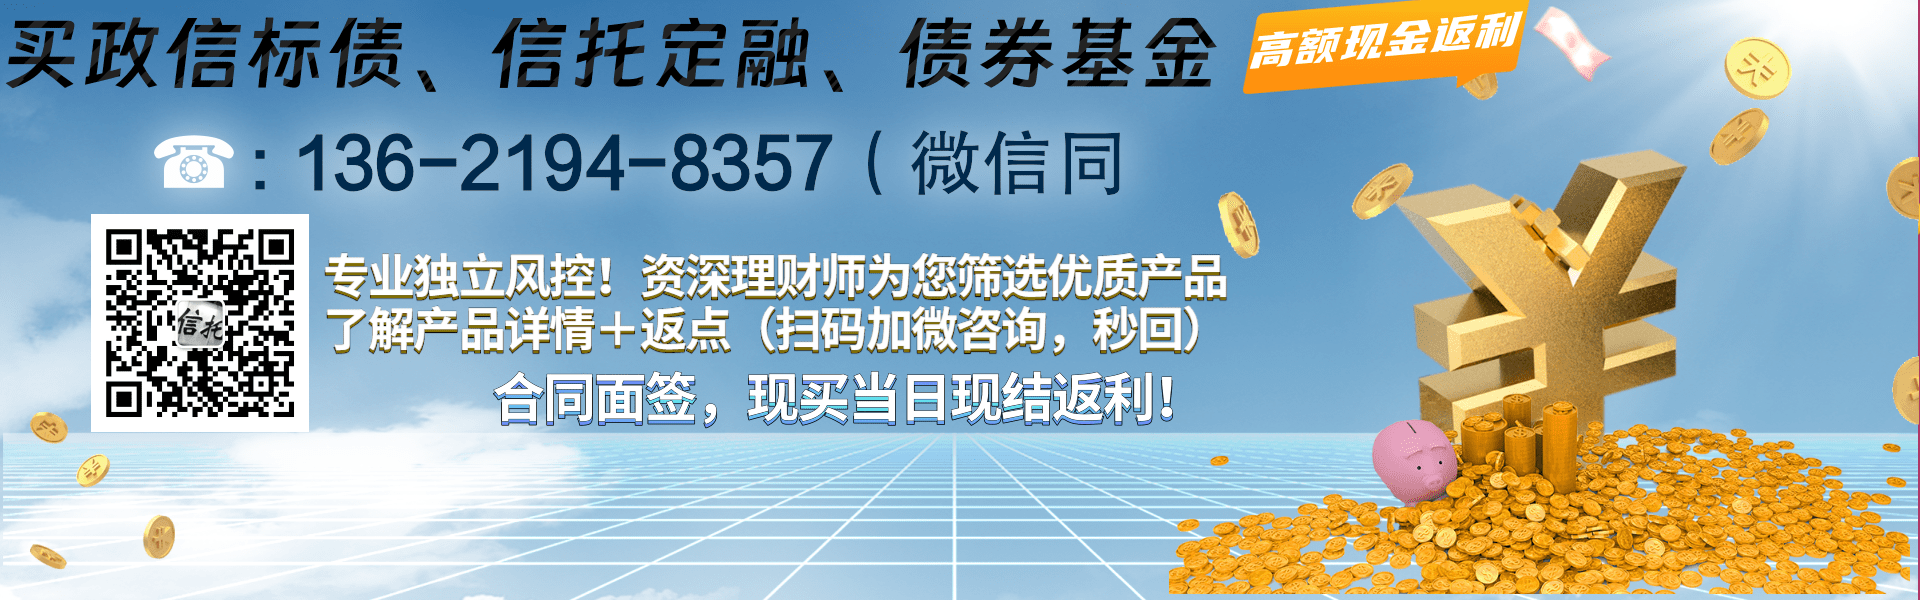 ZF控股2022债权收益权01